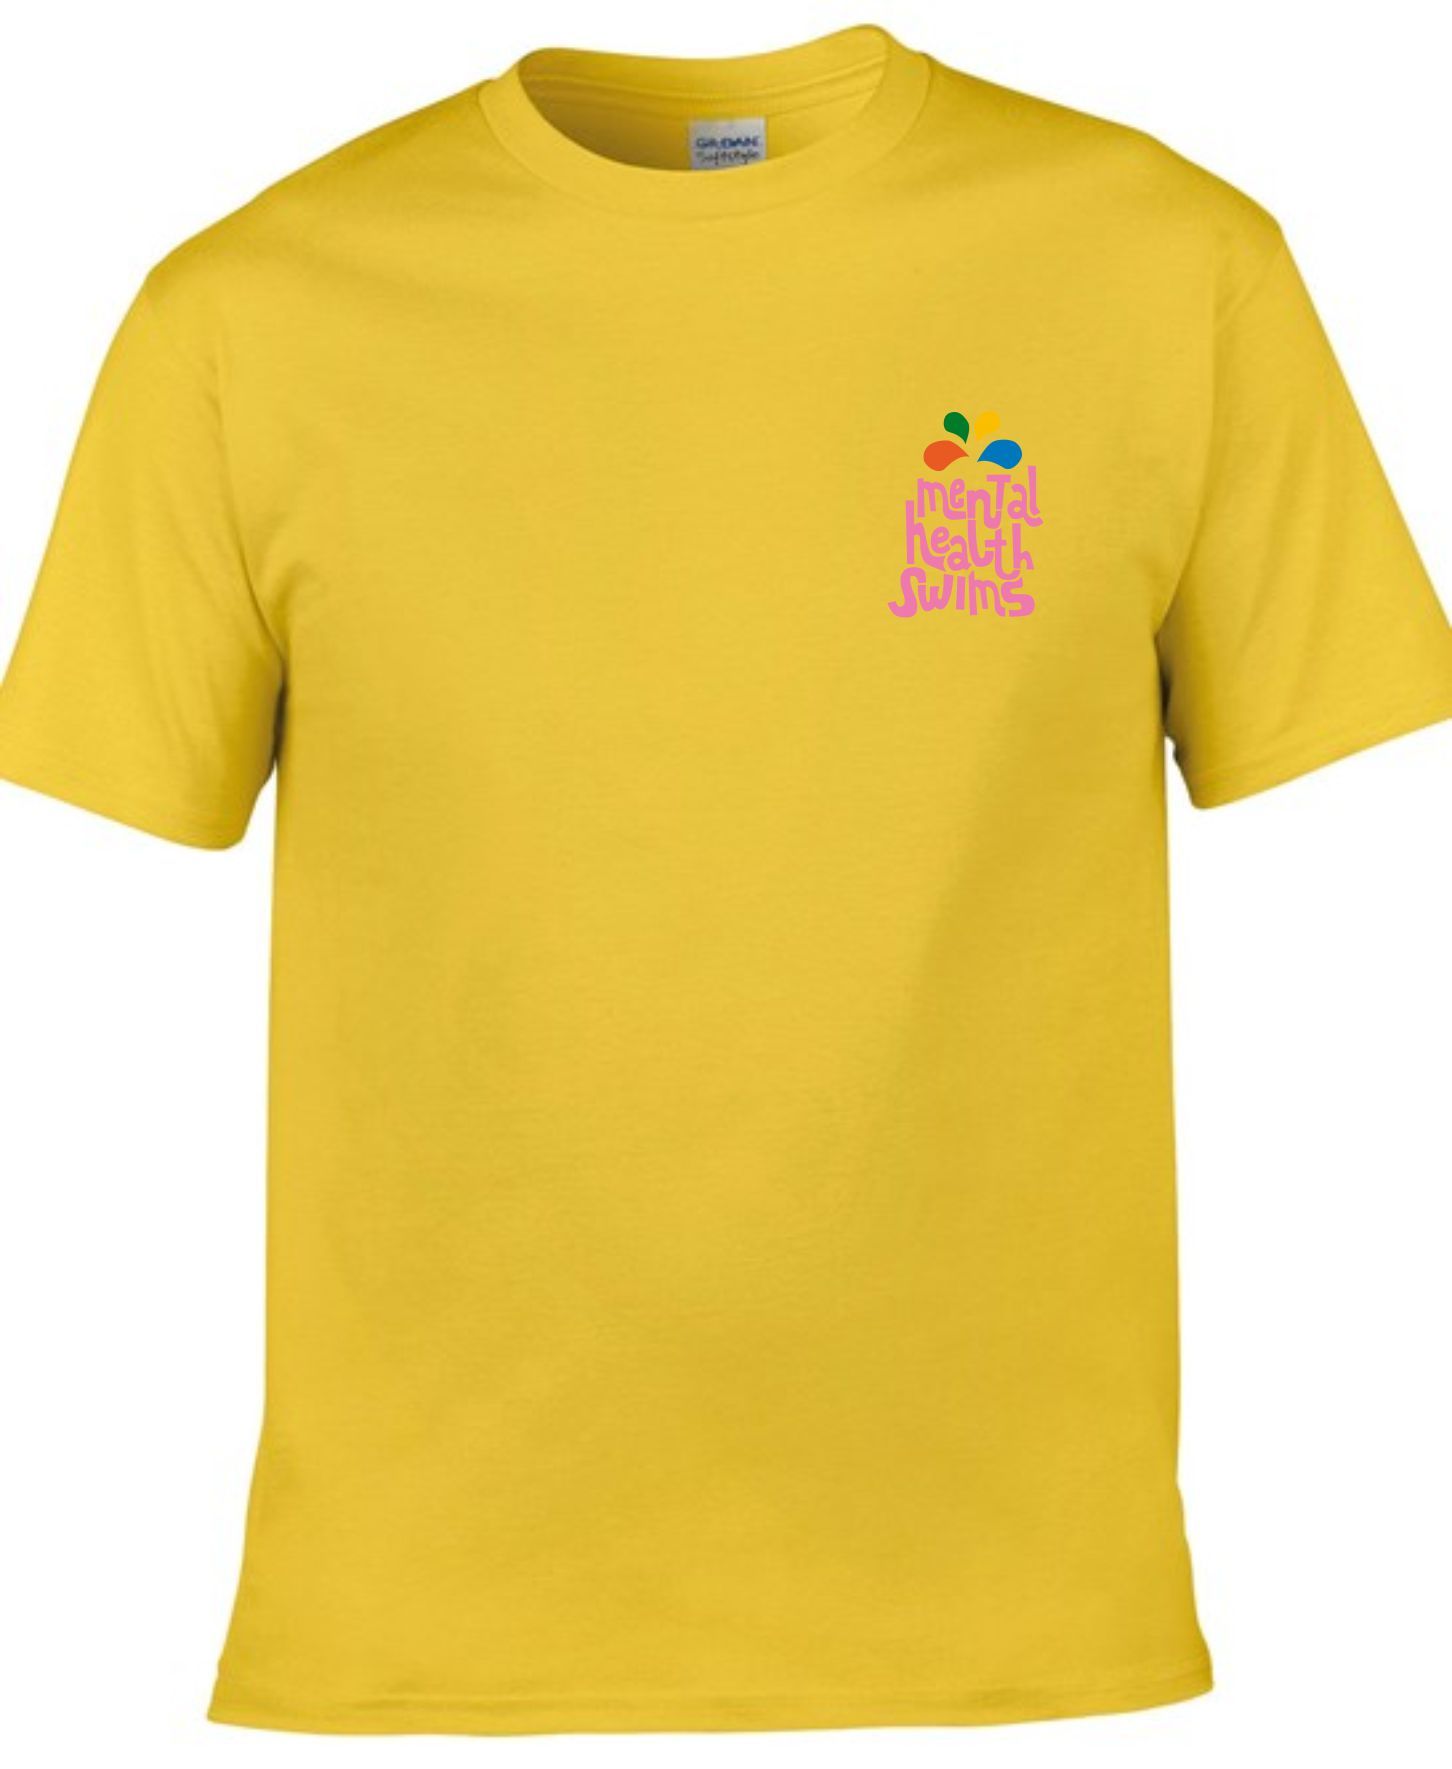 Mental Health Swims- 'Logo with Splashes' Daisy T-shirt (Unisex)